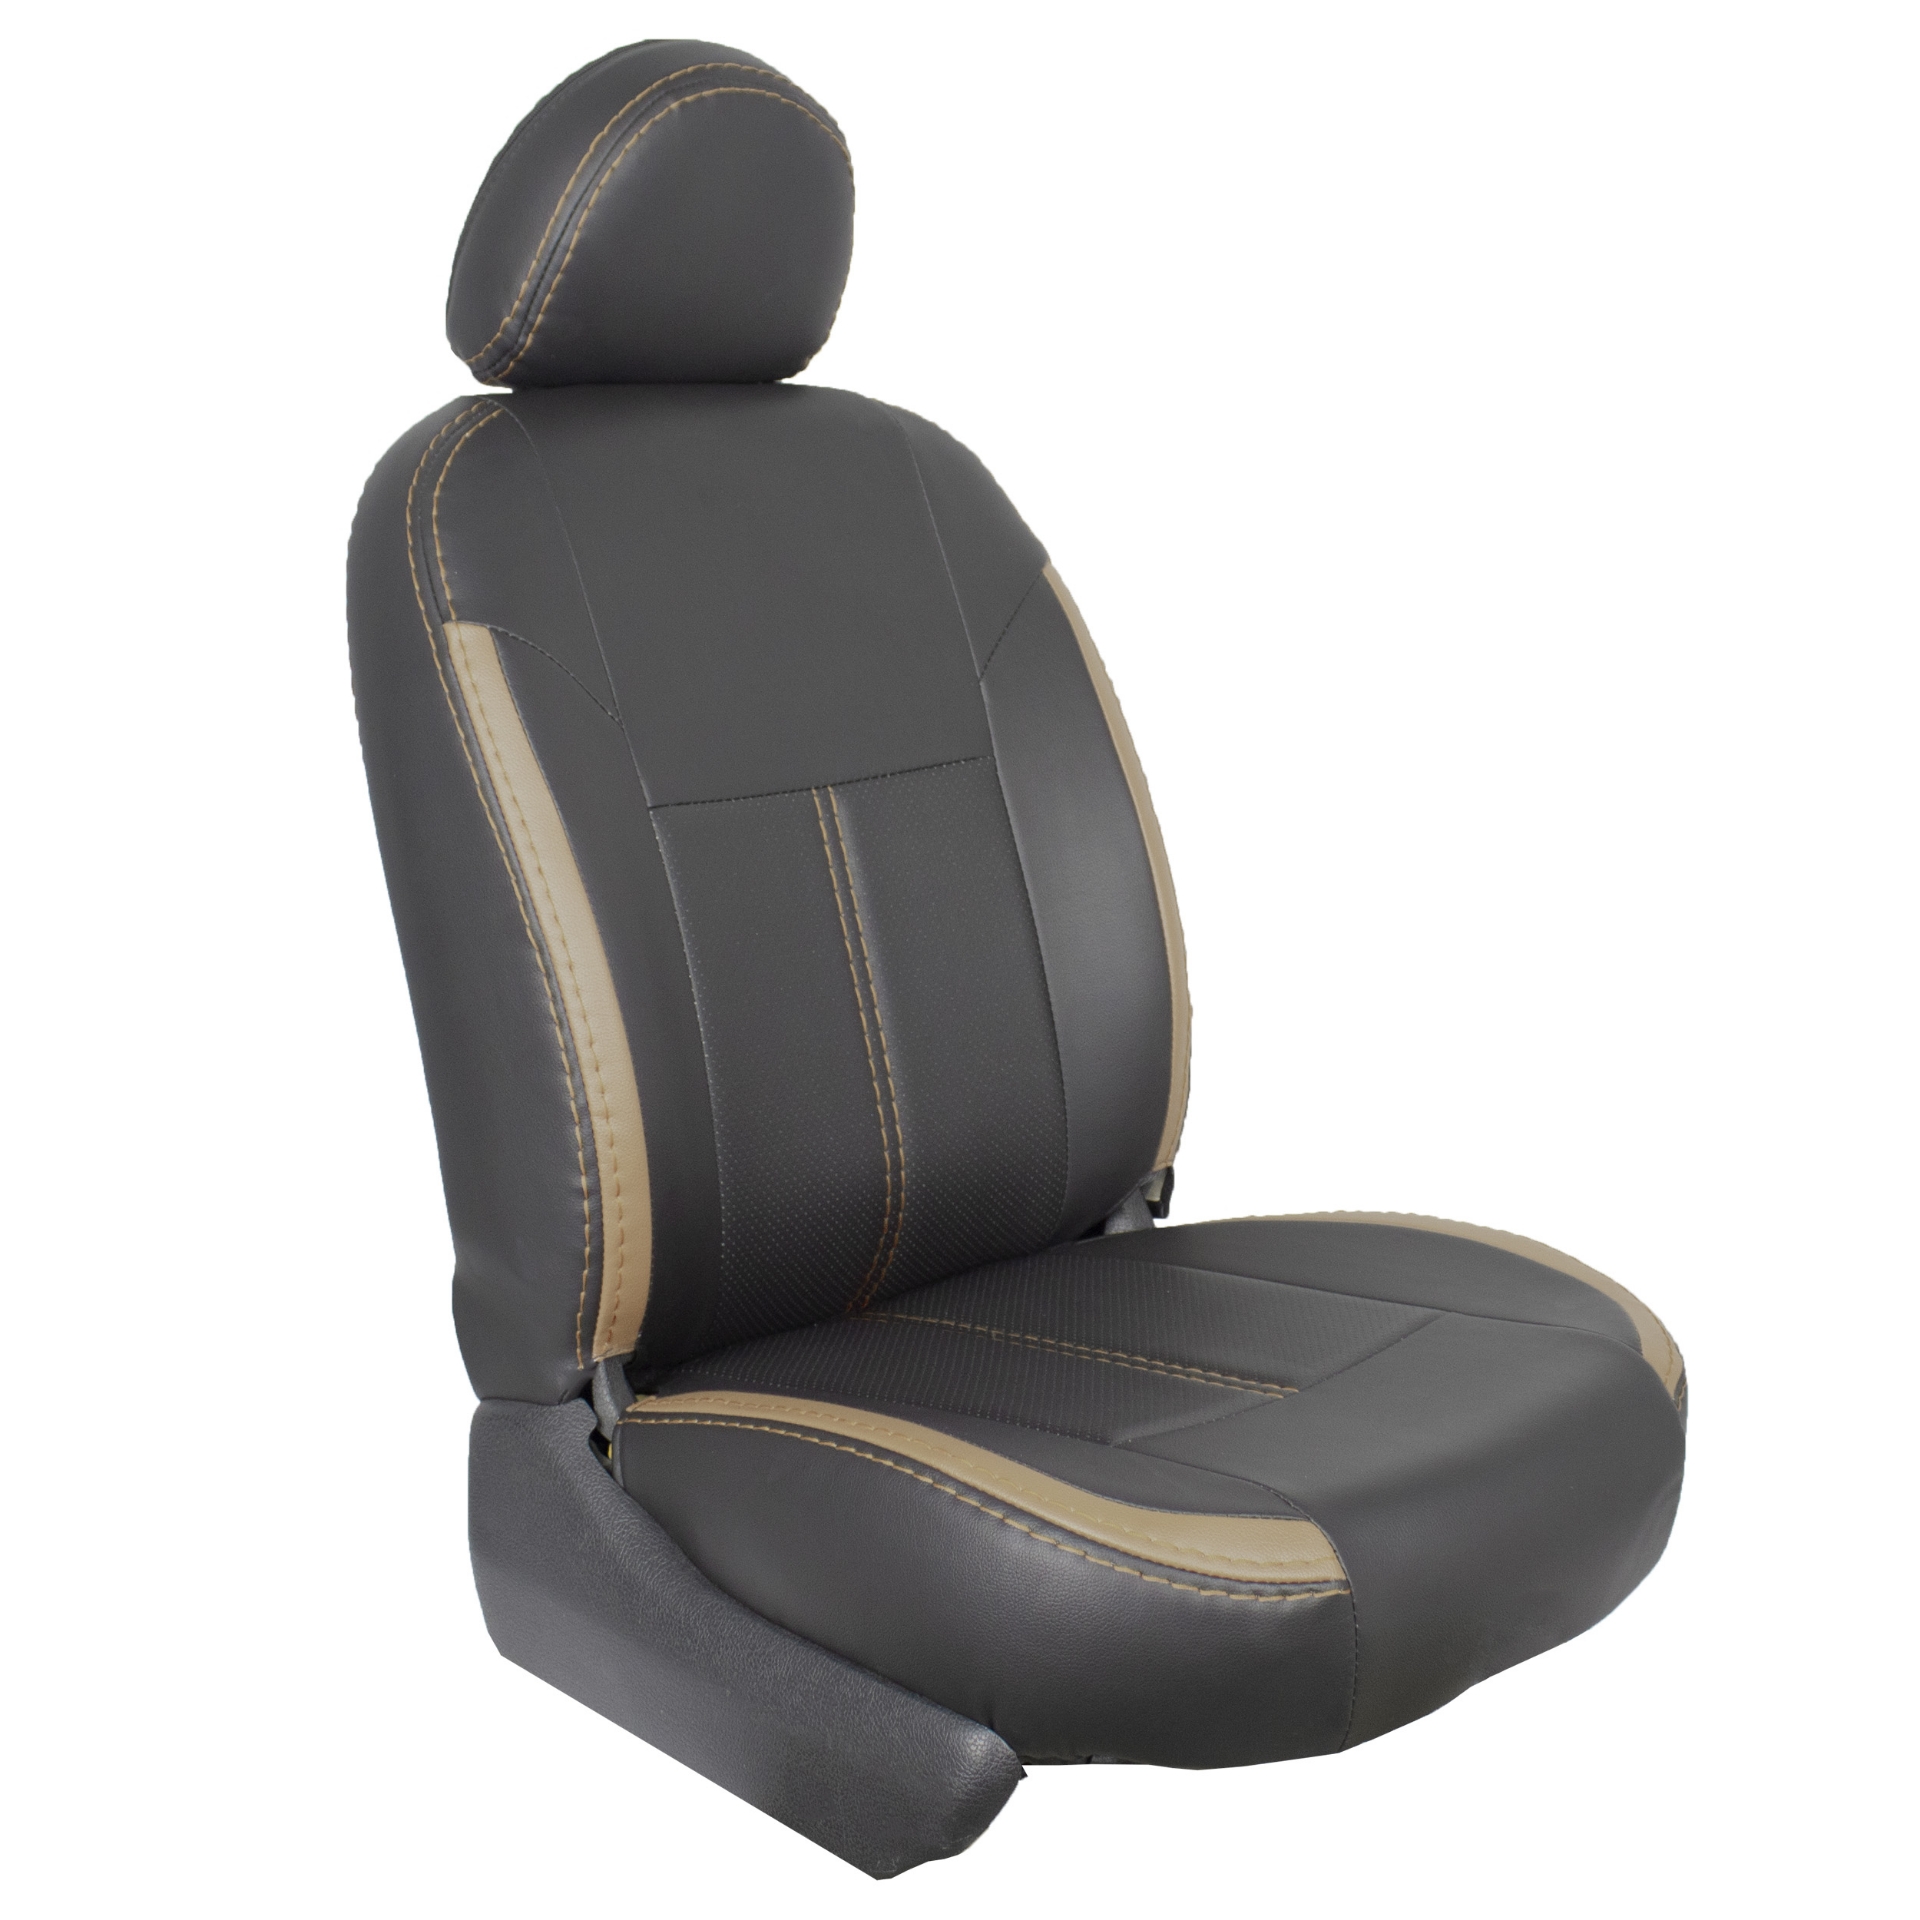 تصویر  روکش صندلی 206 چرم مصنوعی طرح پانچ جلوه مدل tasme